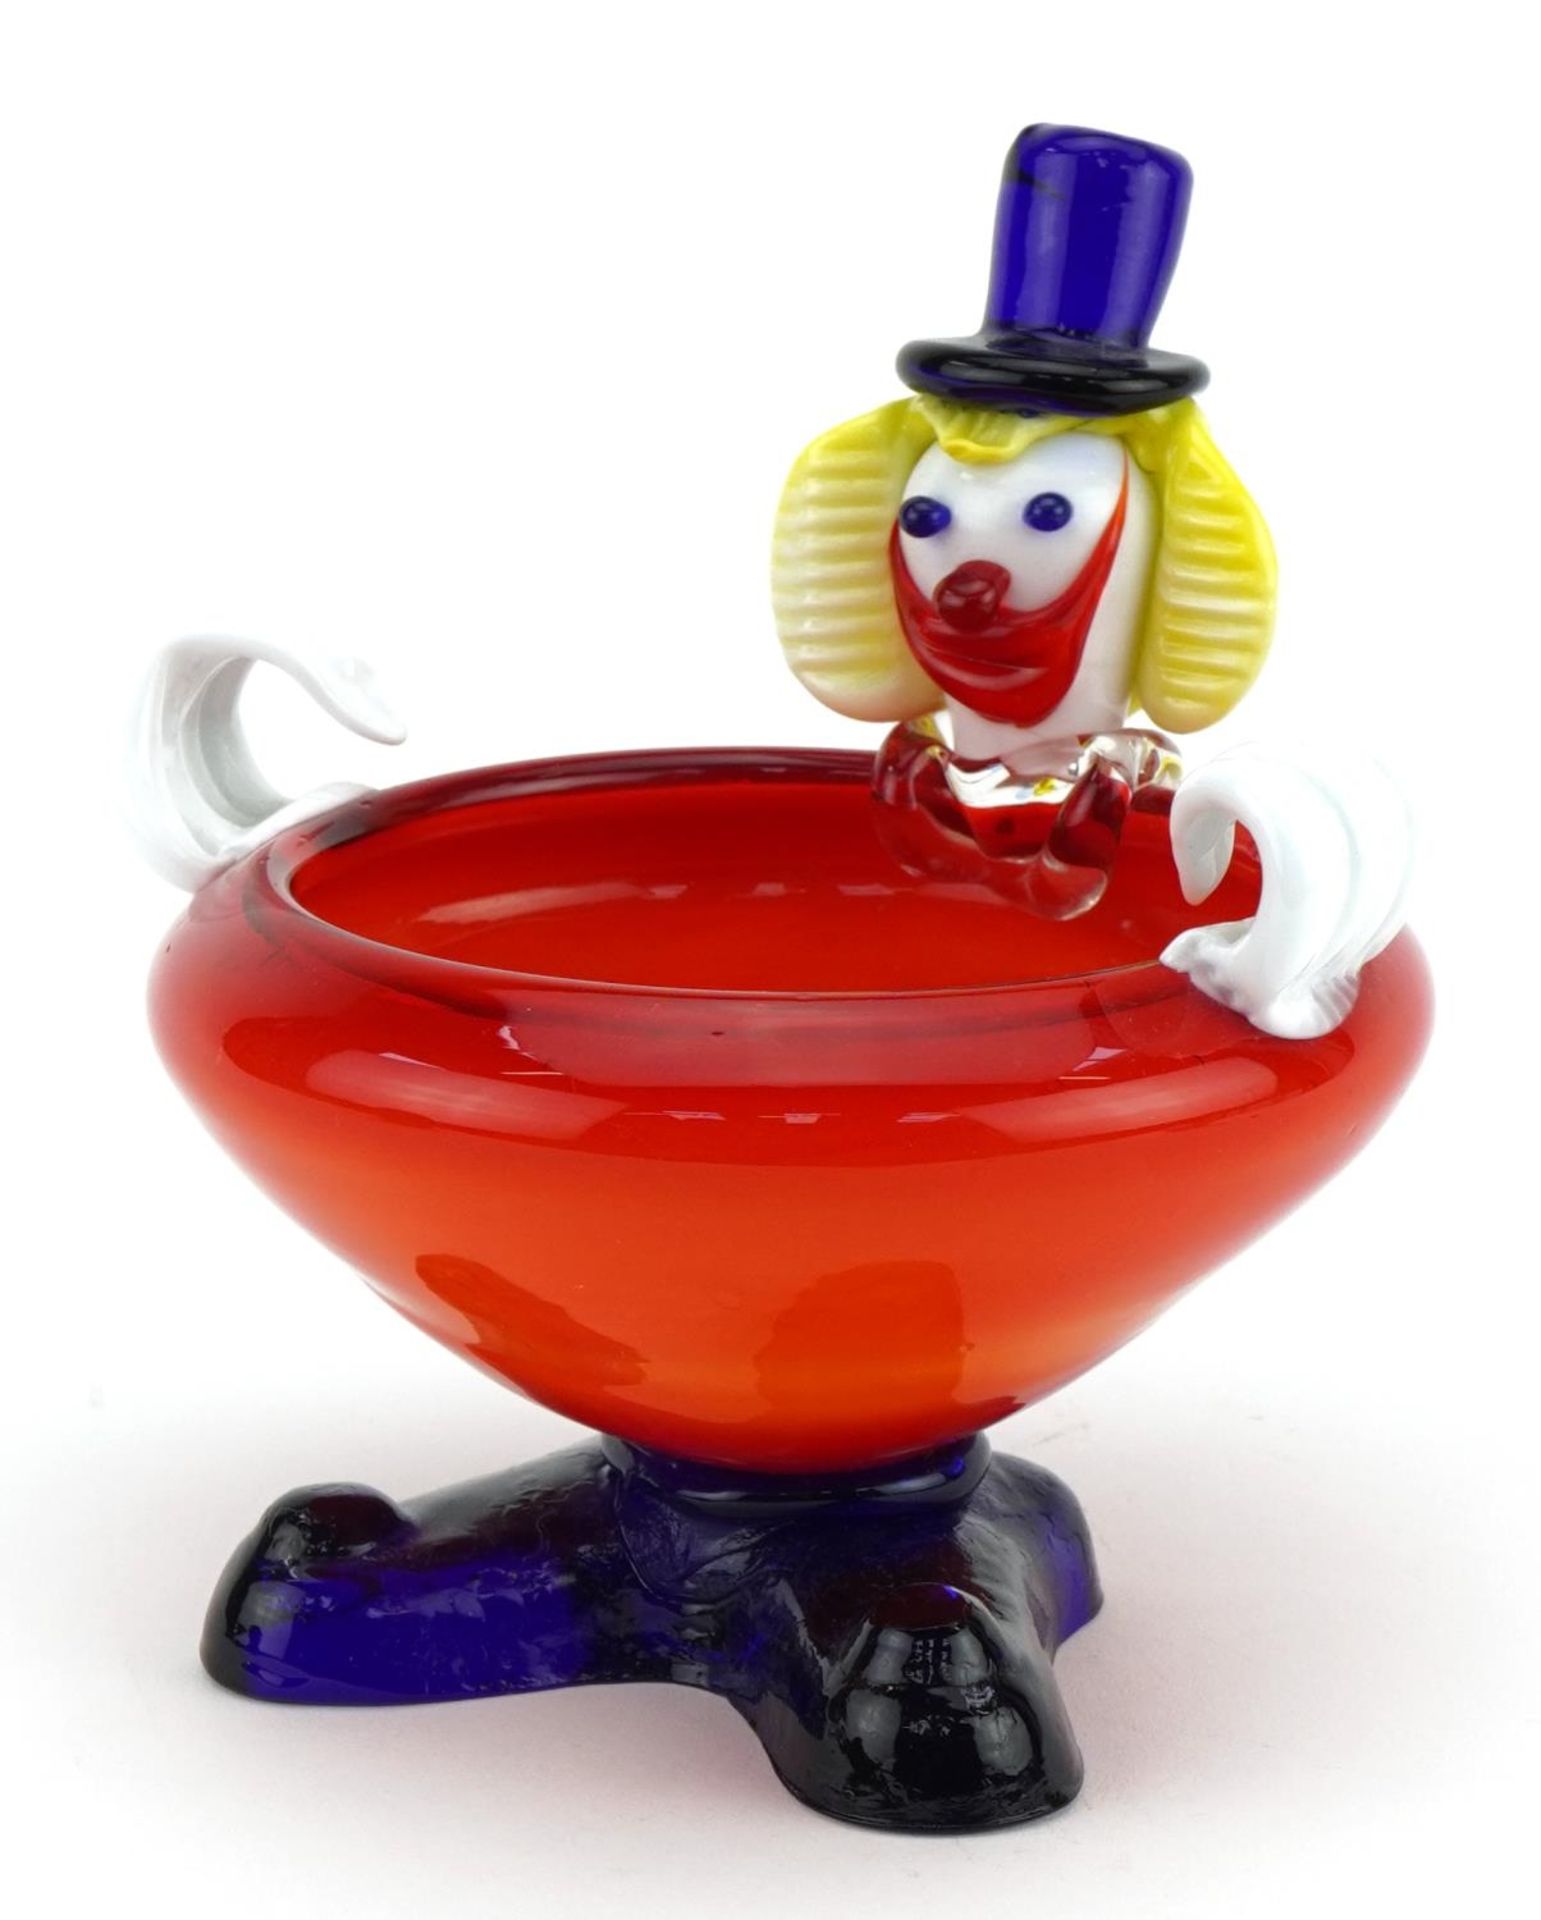 Murano style glass clown dish, 15cm high